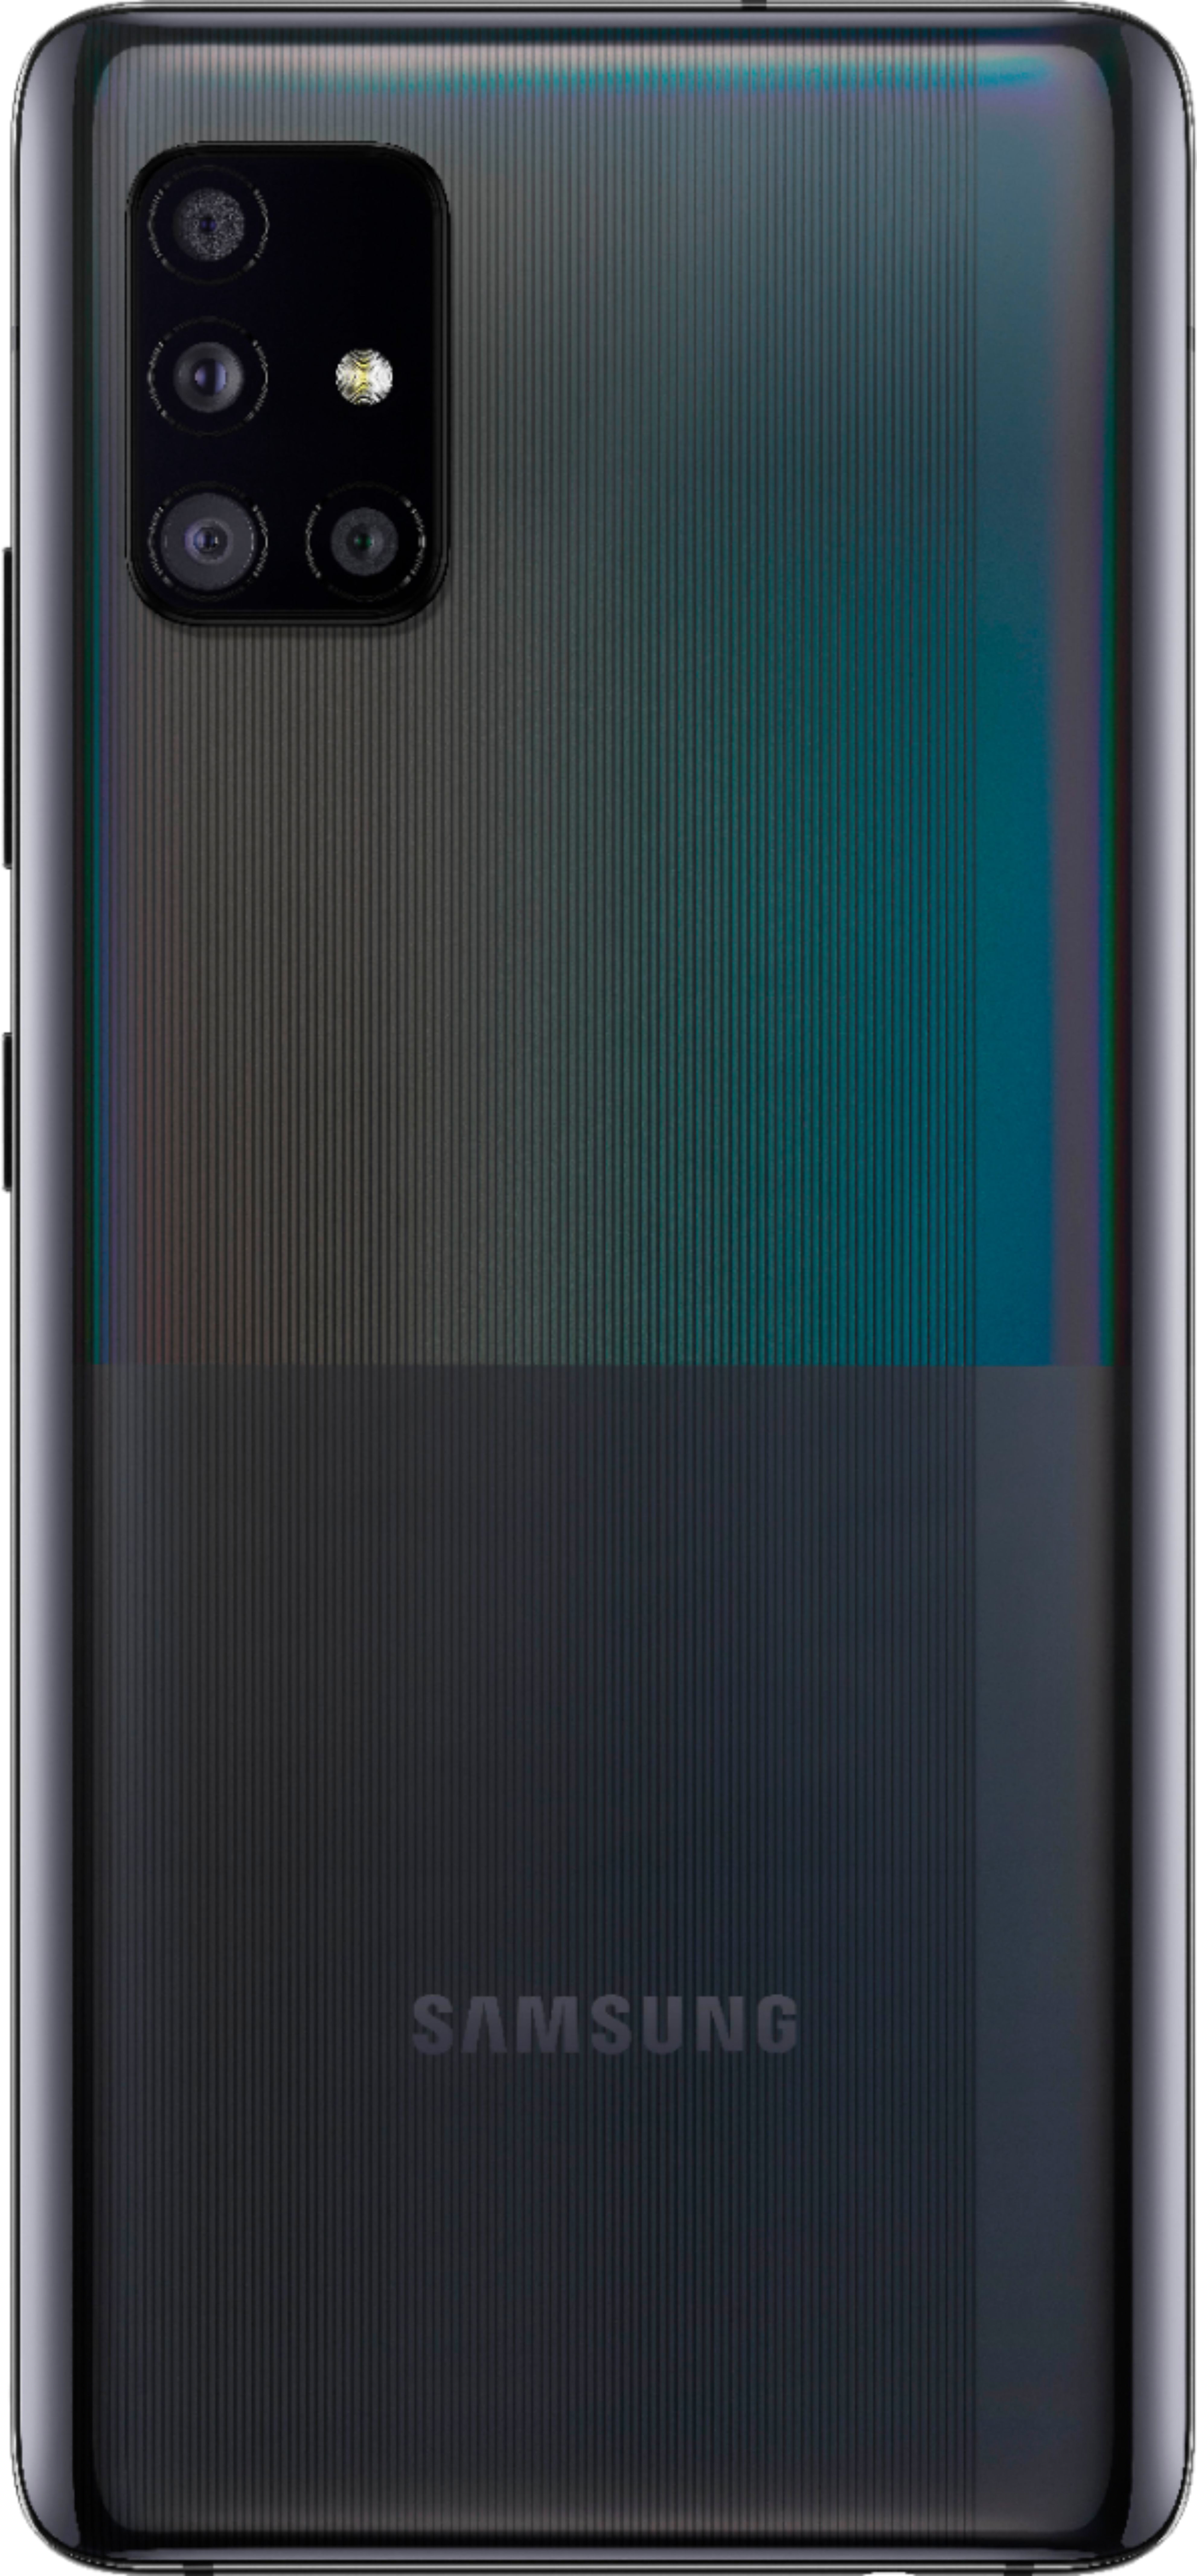 Samsung - Galaxy A51 5G 128GB - Prism Cube Black (AT&T)